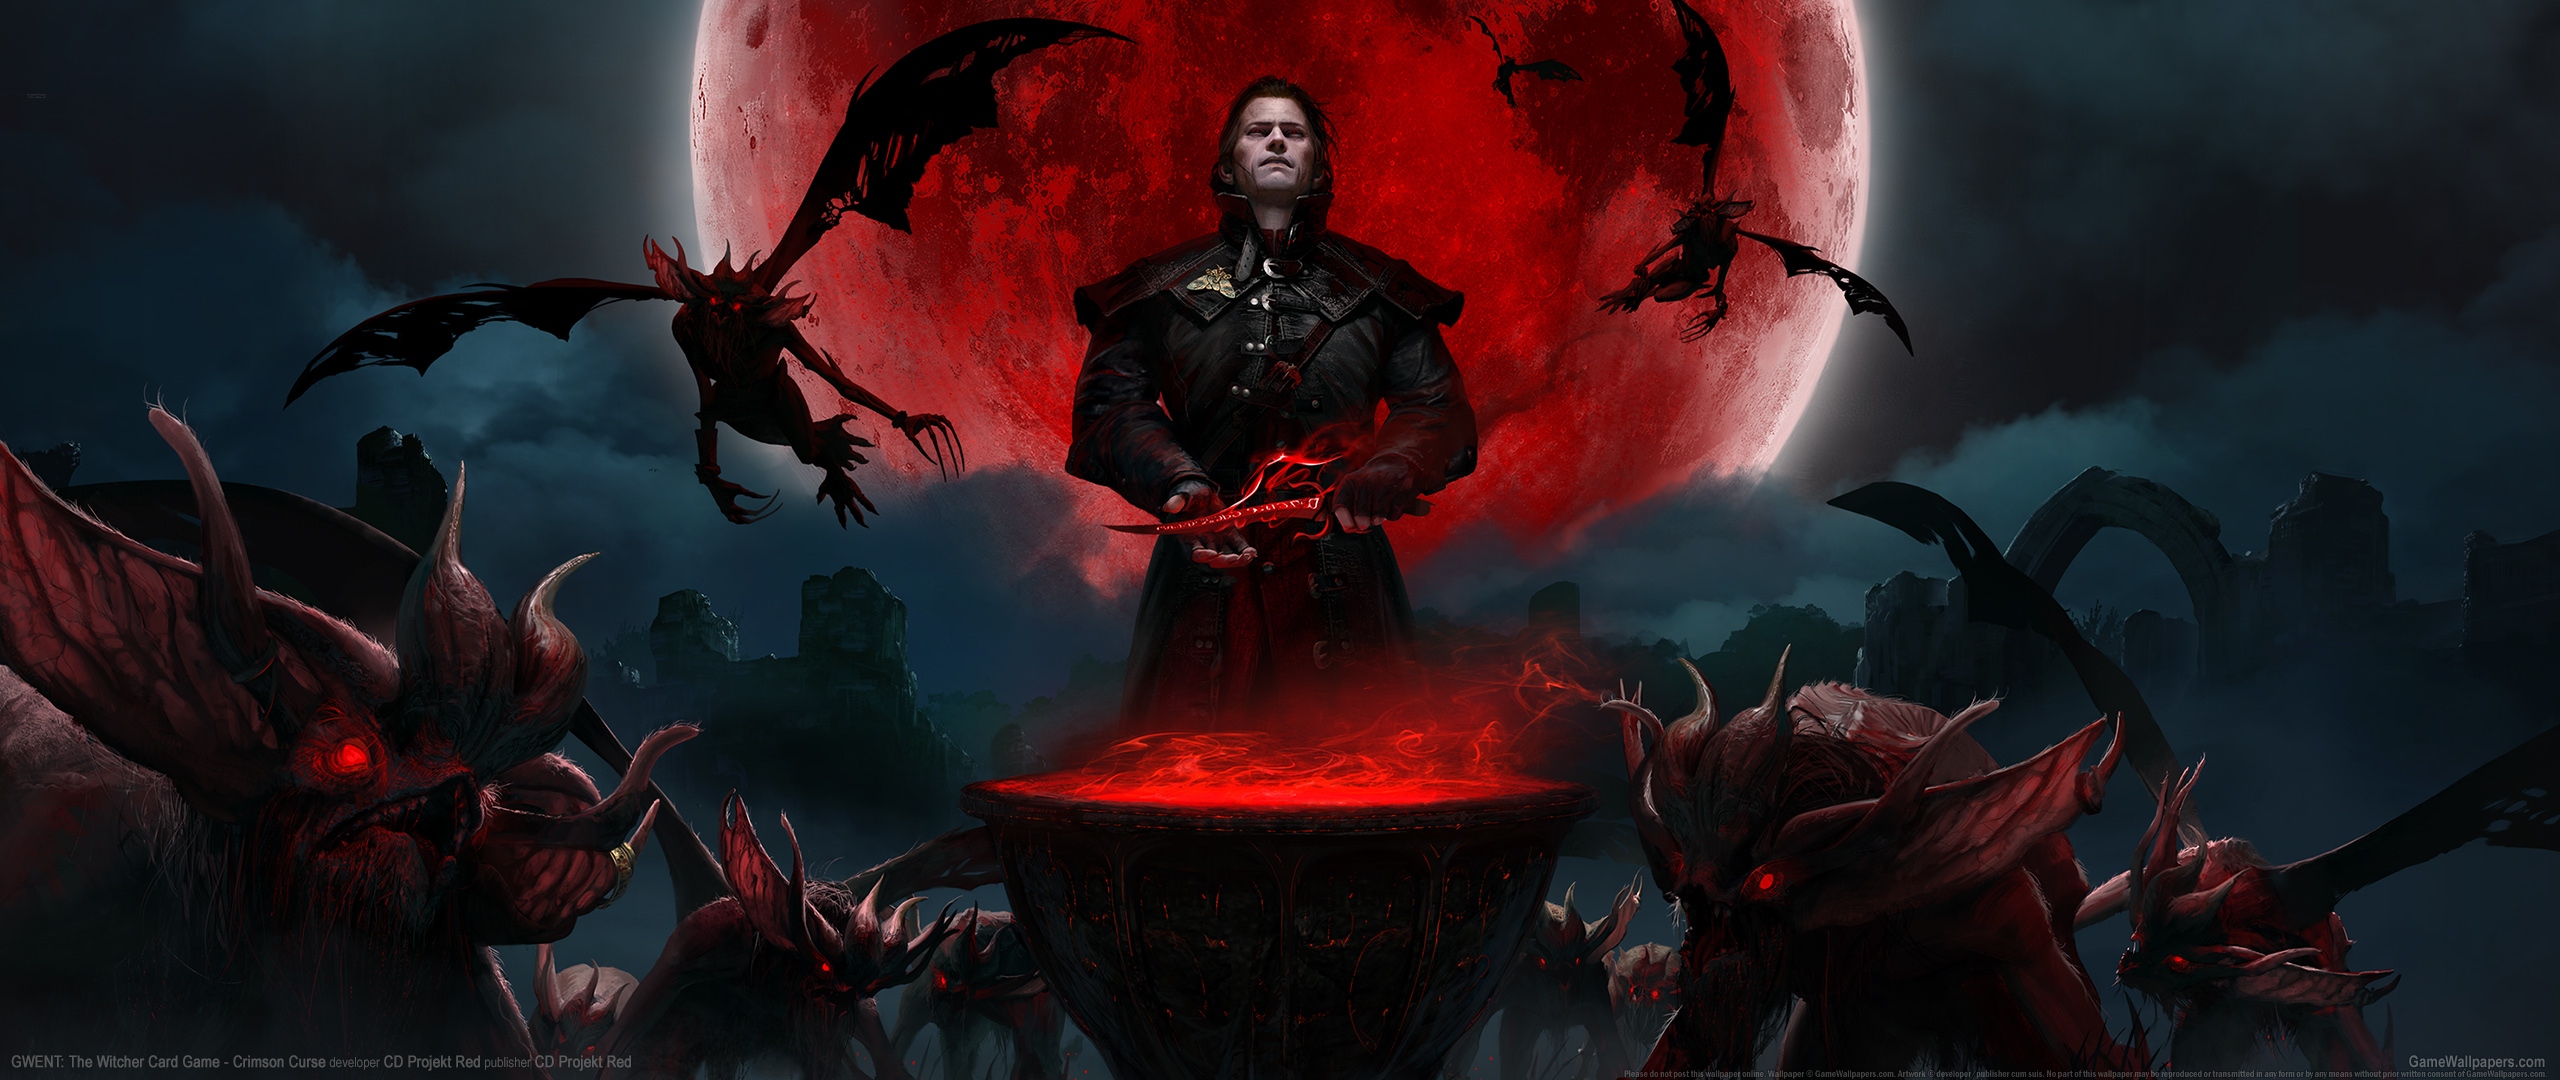 GWENT: The Witcher Card Game - Crimson Curse 2560x1080 achtergrond 01